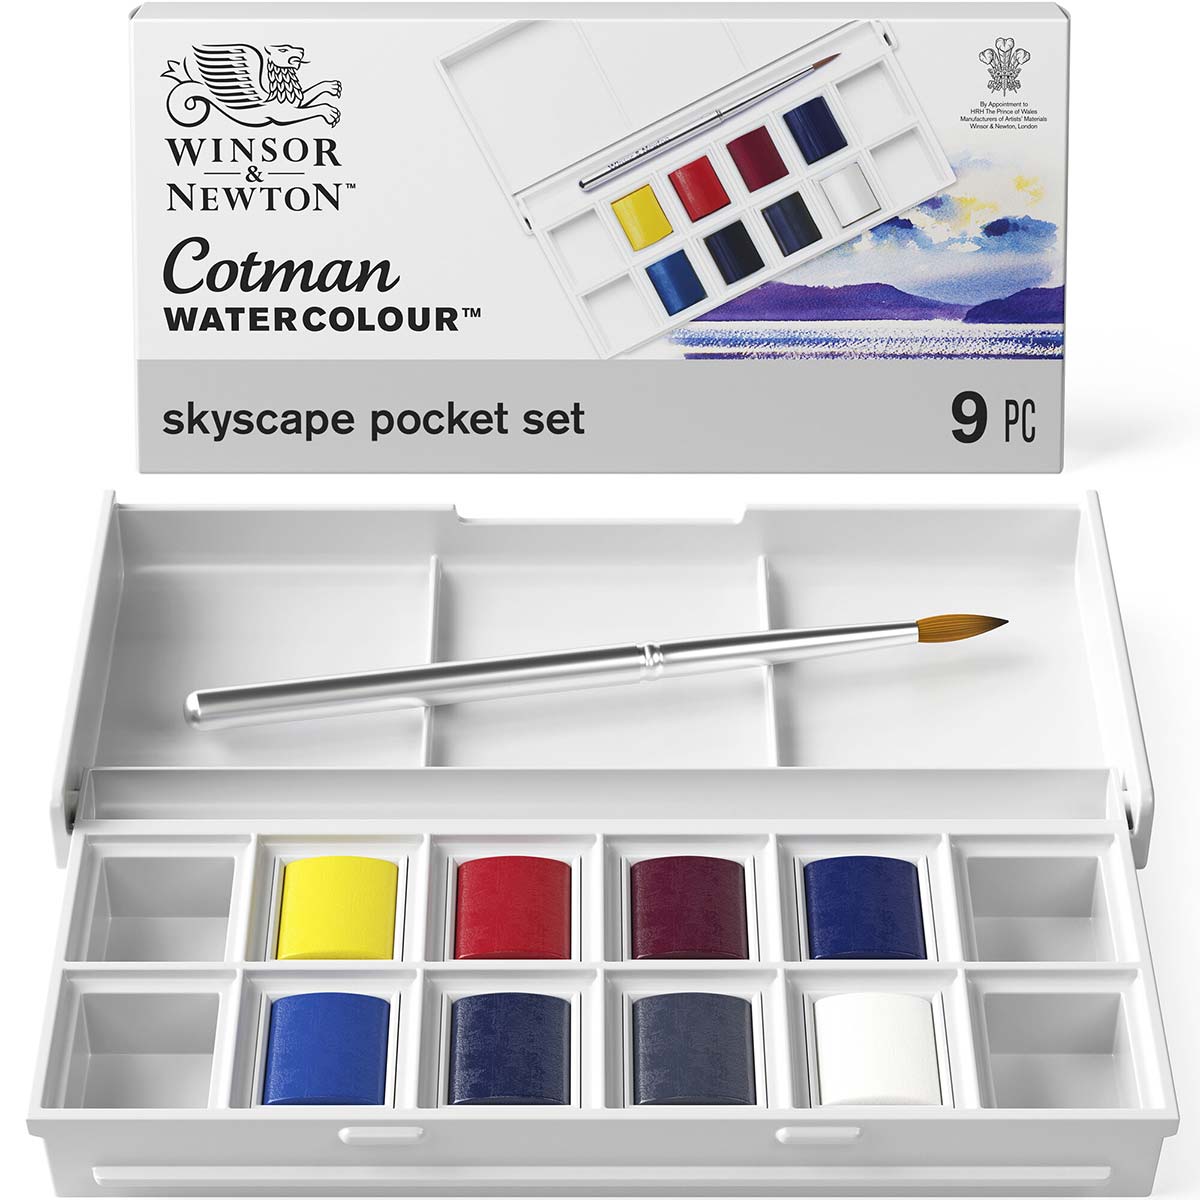 Winsor & Newton - Cotman Watercolour - Pocket Set - Skyscape